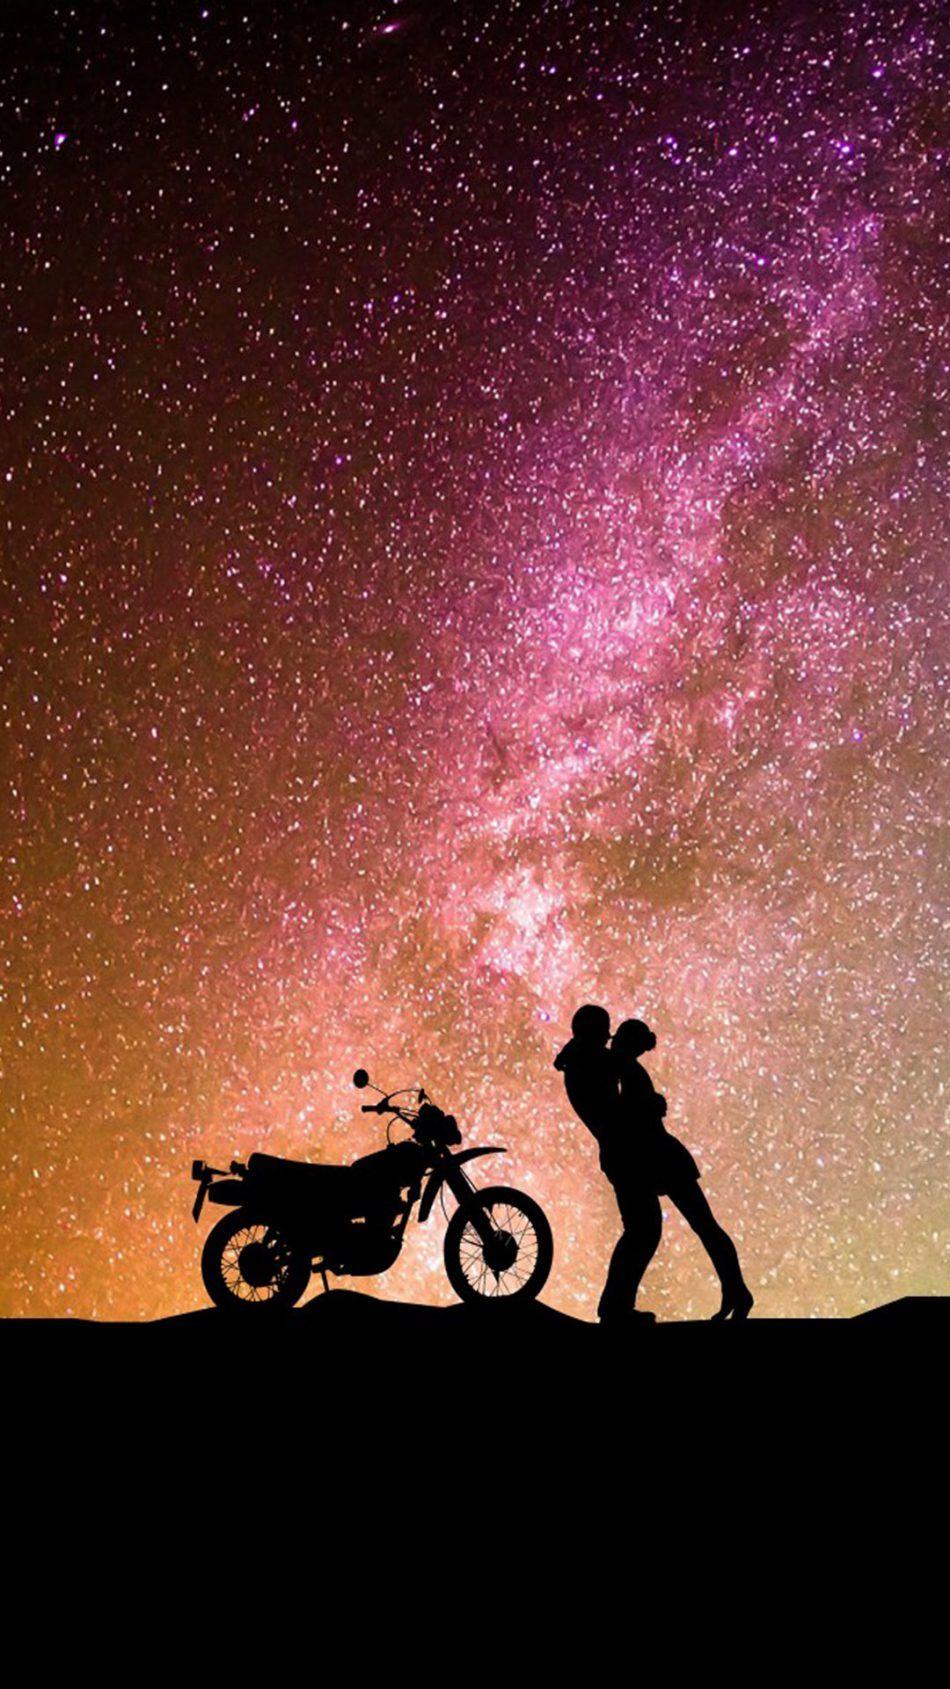 Couple Romantic Kiss Motorcycle. Couple wallpaper, Love wallpaper